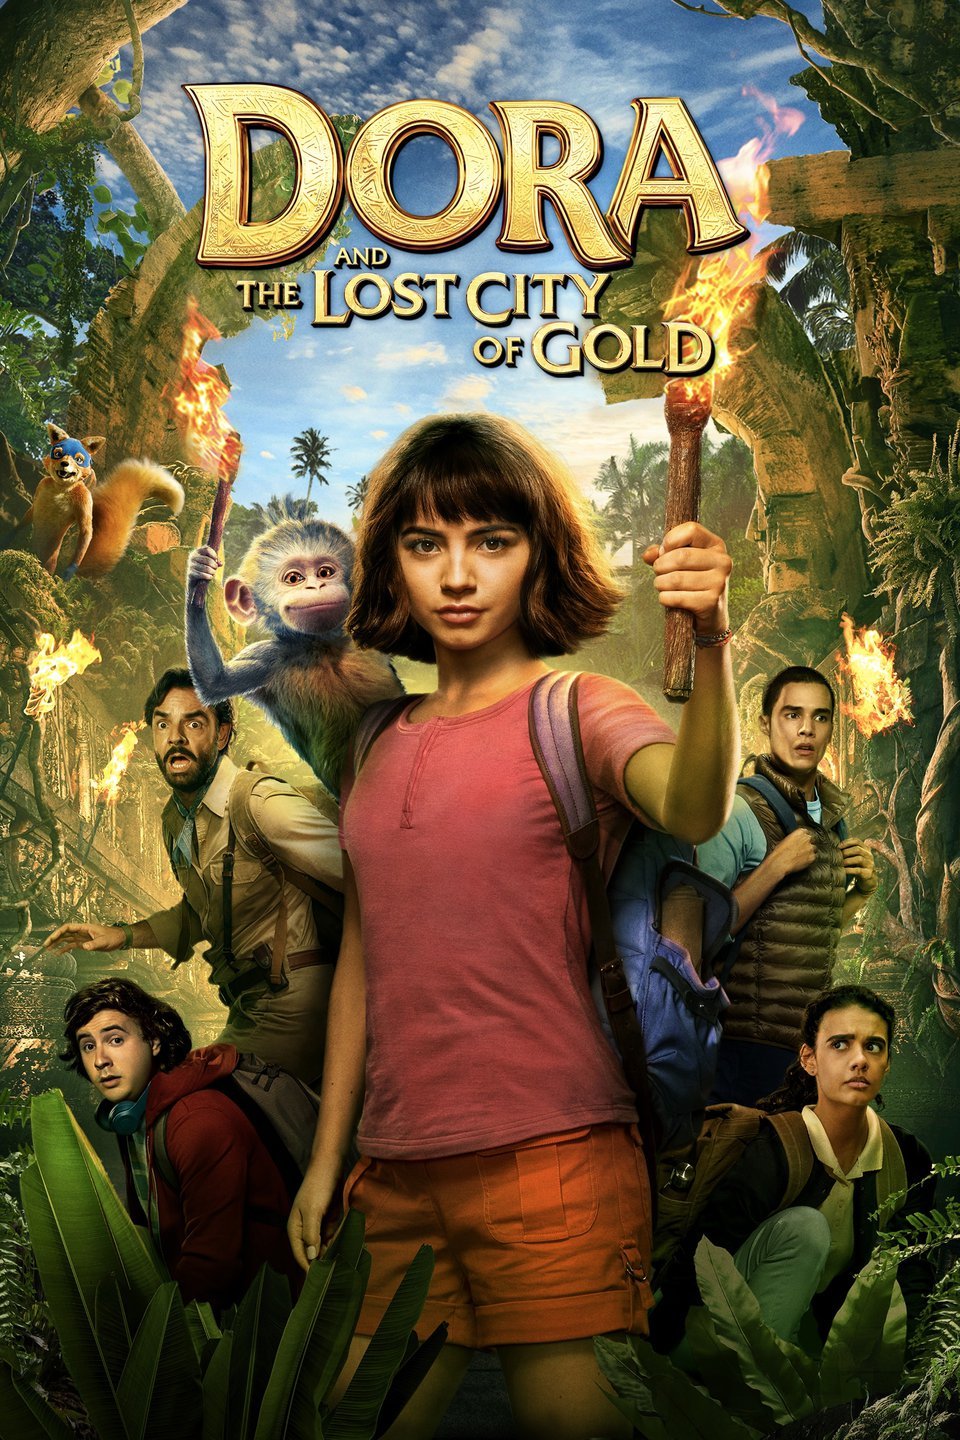 Dora Movie Poster